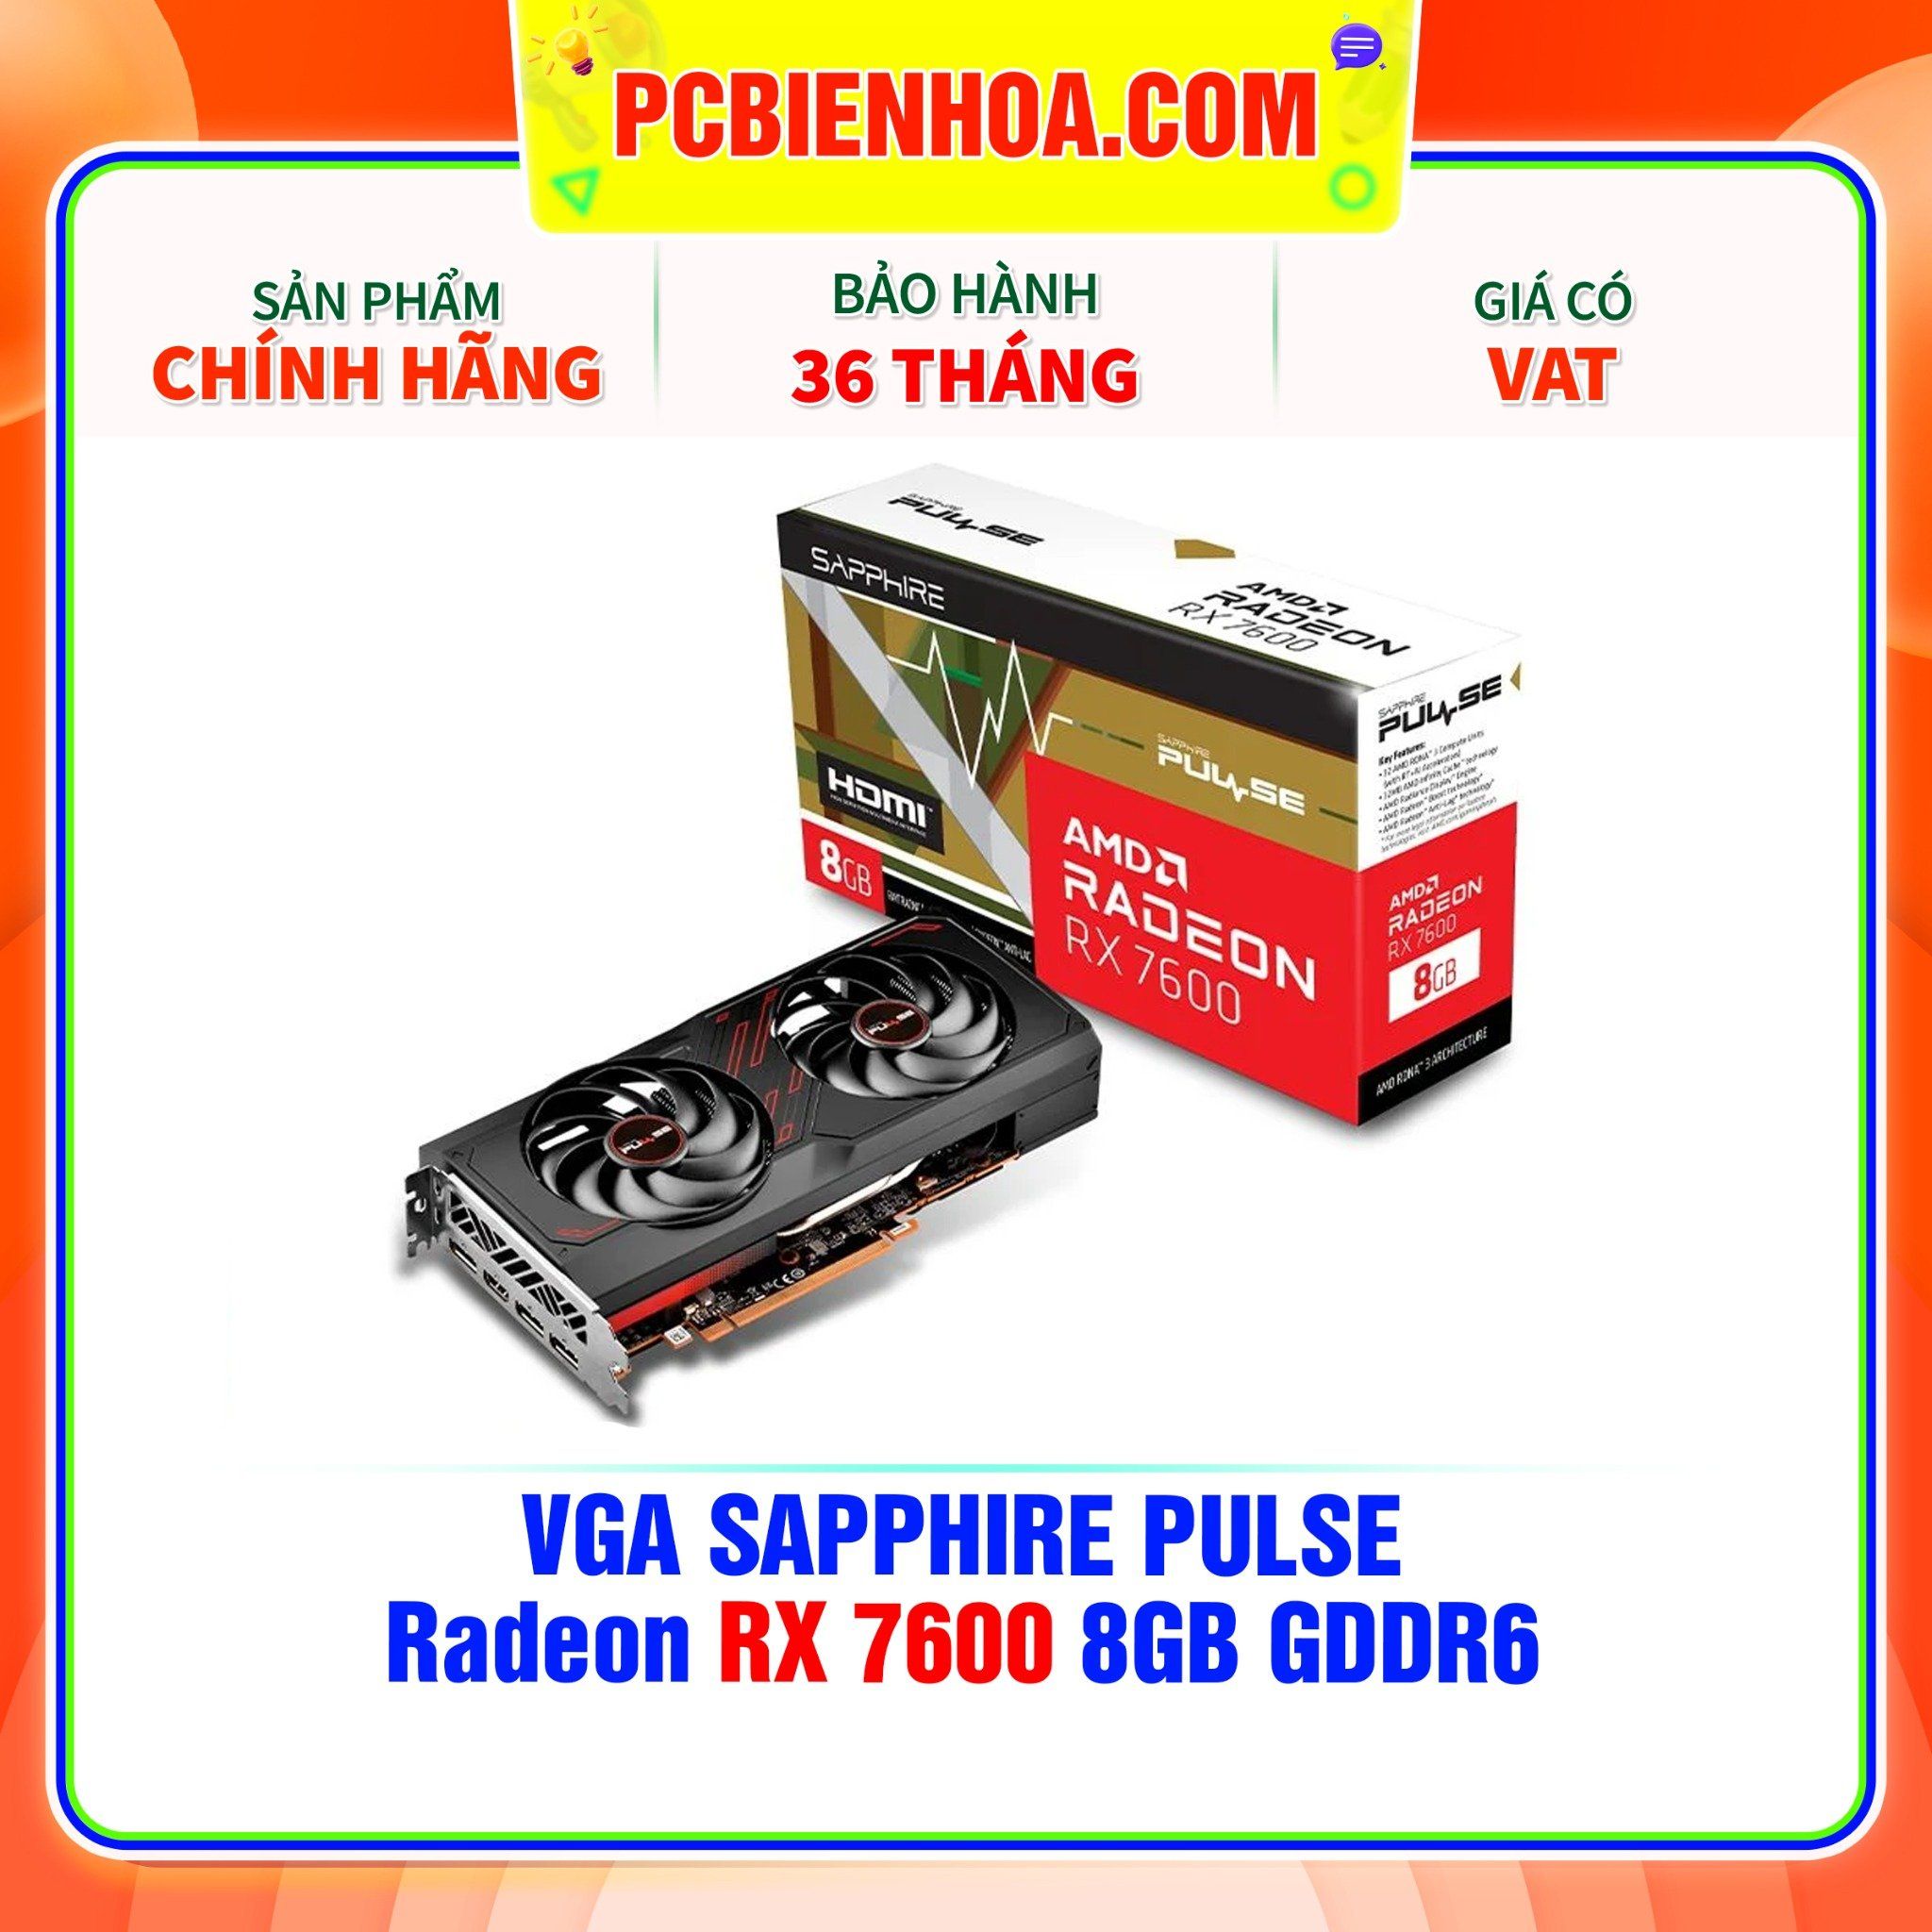  VGA SAPPHIRE PULSE Radeon RX 7600 8GB GDDR6 ( 11324-01-20G ) 